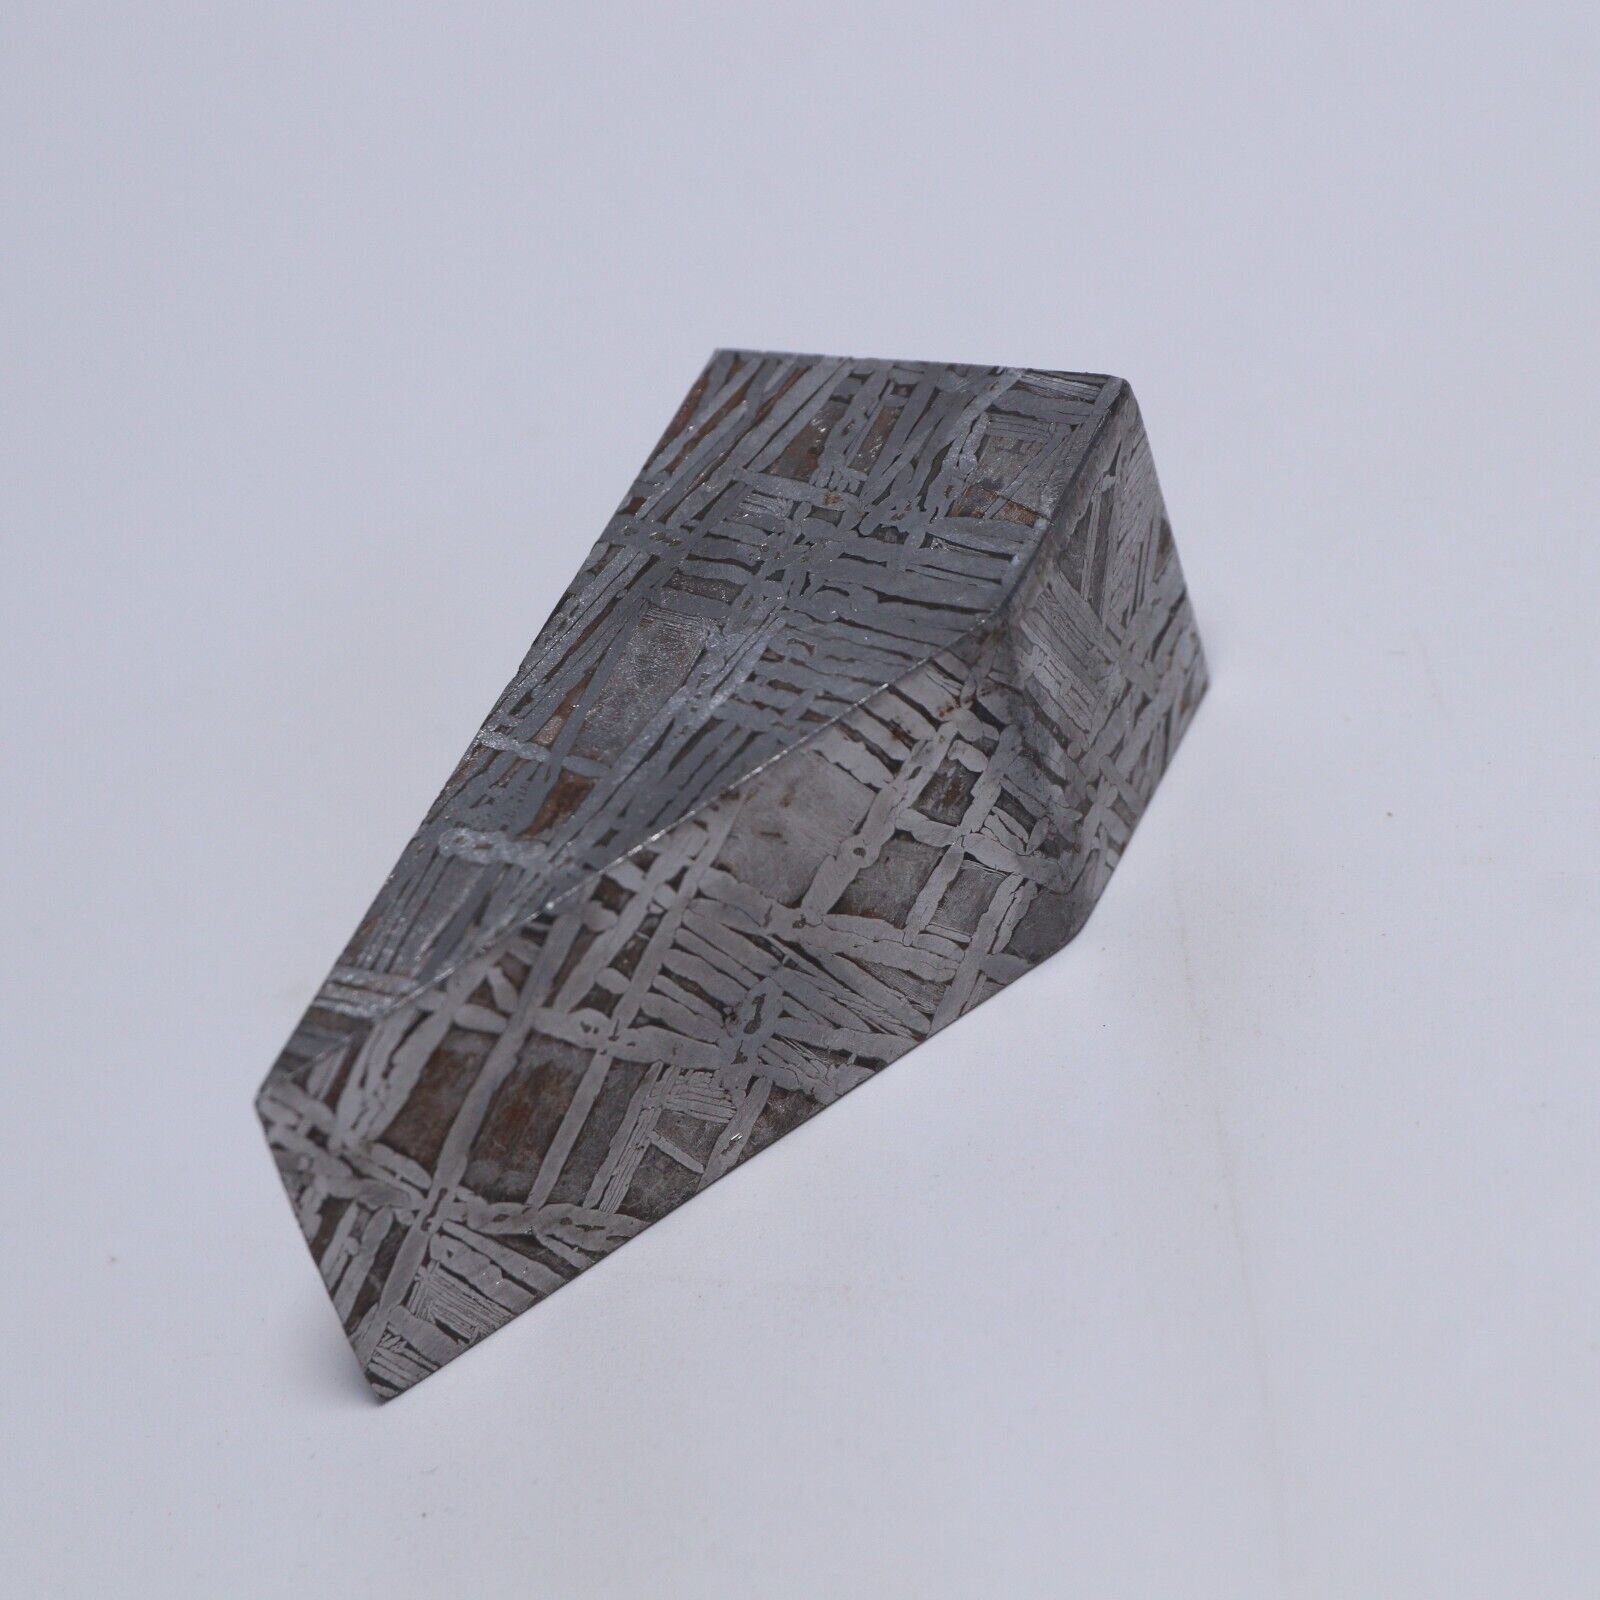 112g Muonionalusta meteorite,Natural meteorite slices,Collectibles,gift N3855